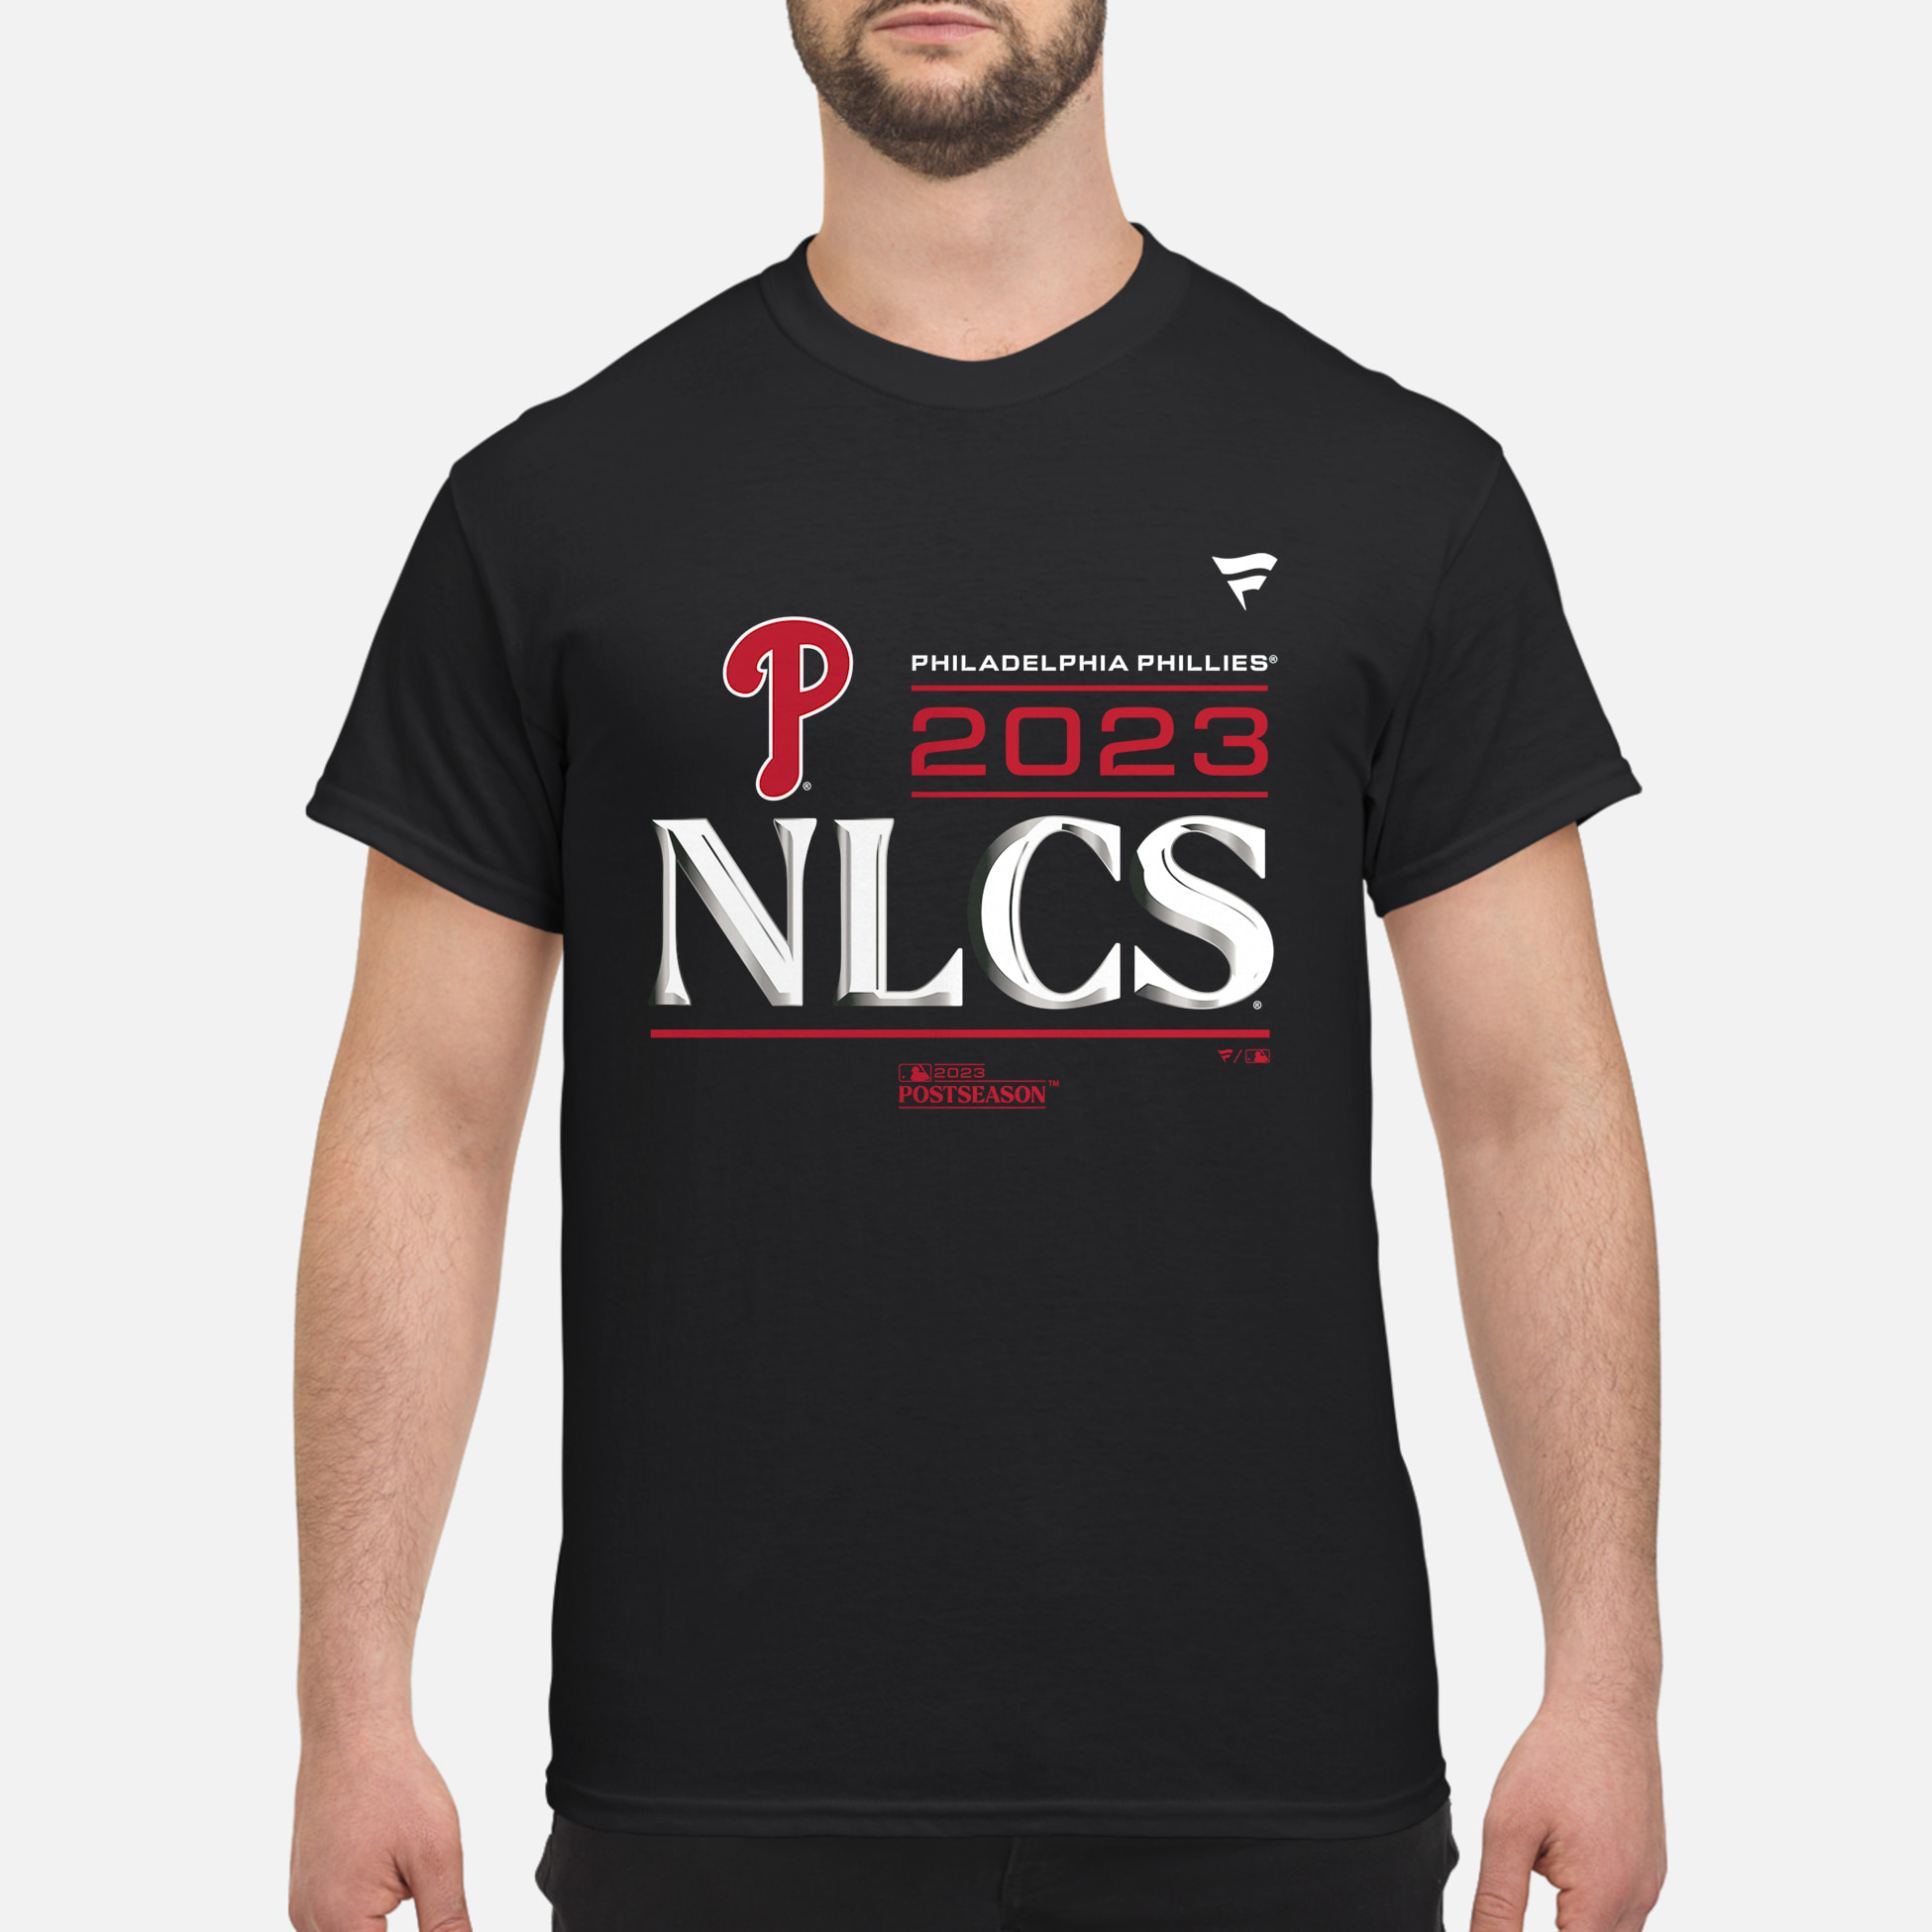 Philadelphia Phillies NLCS Postseason Dancing On Our Own 2023